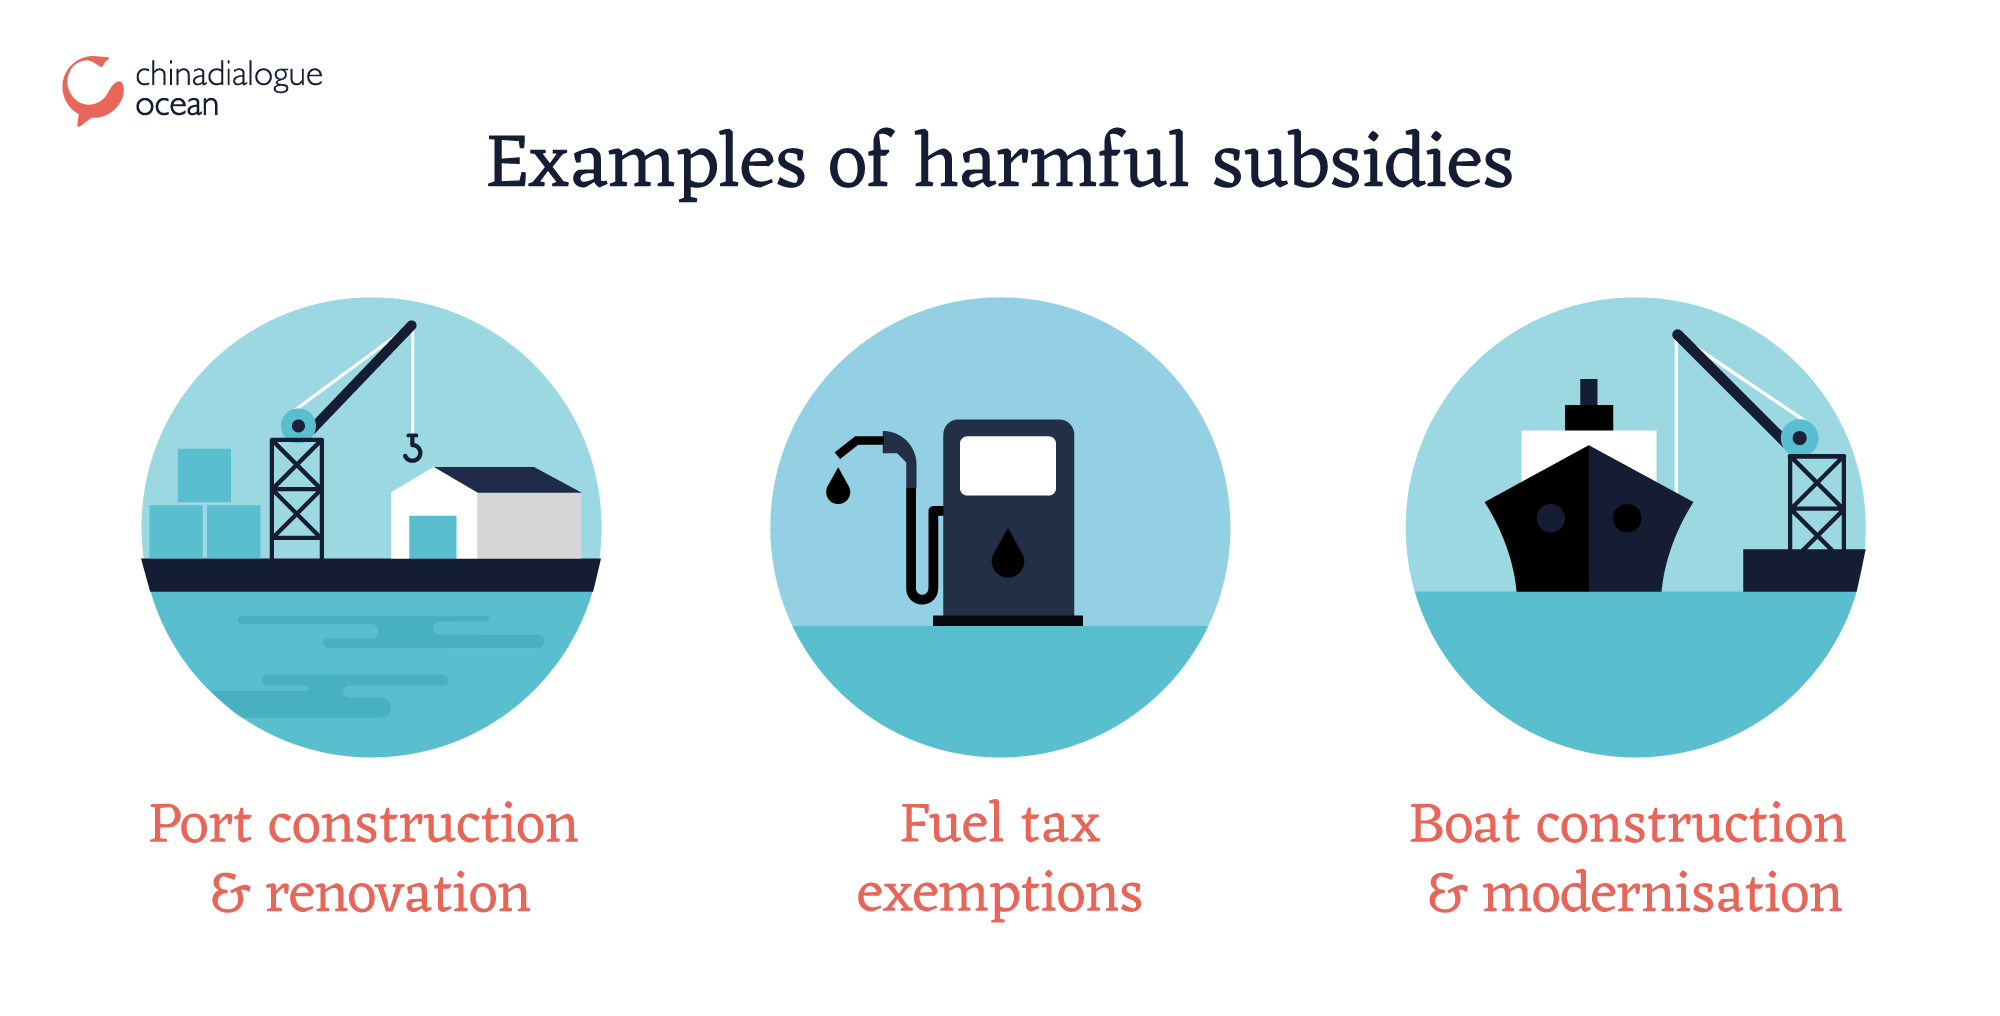 Three harmful fishing subsidies